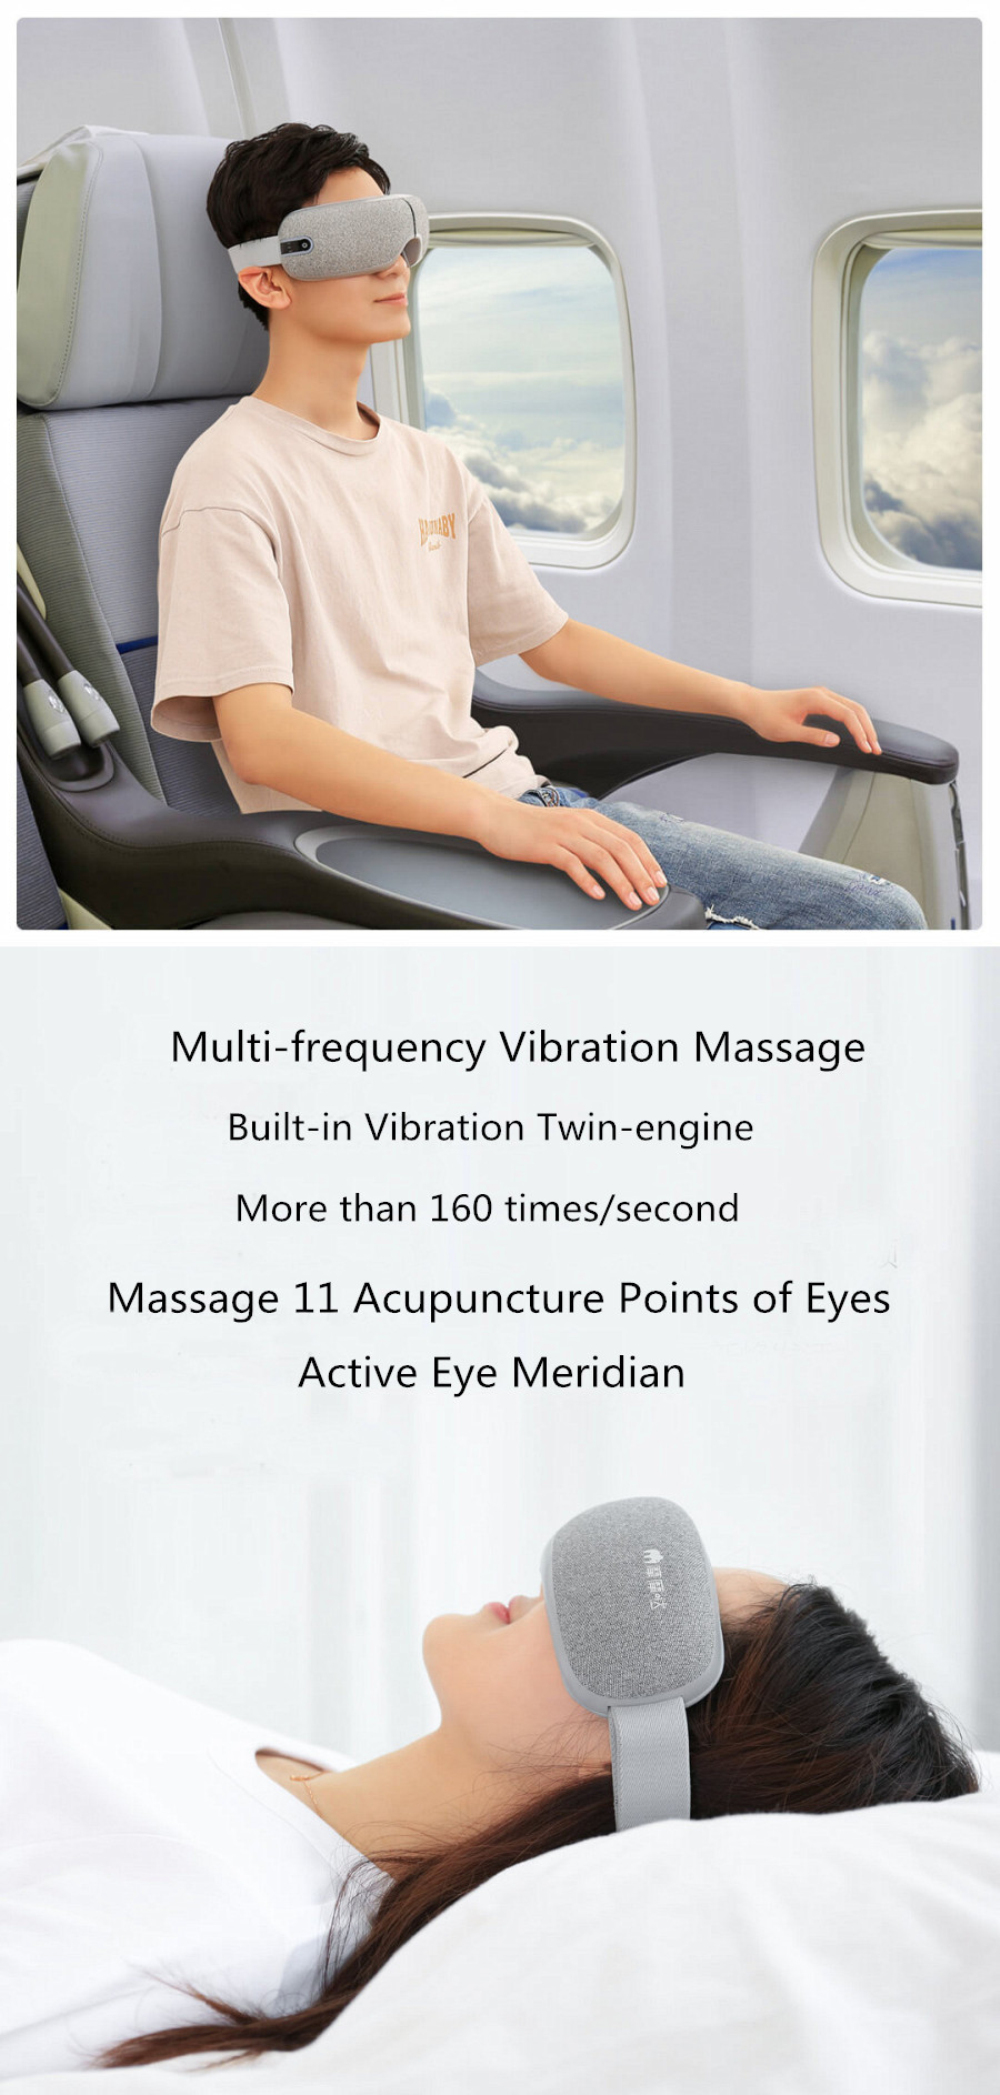 XIAOMI momoda Eye Massager Graphene Eyes Relax Therapy